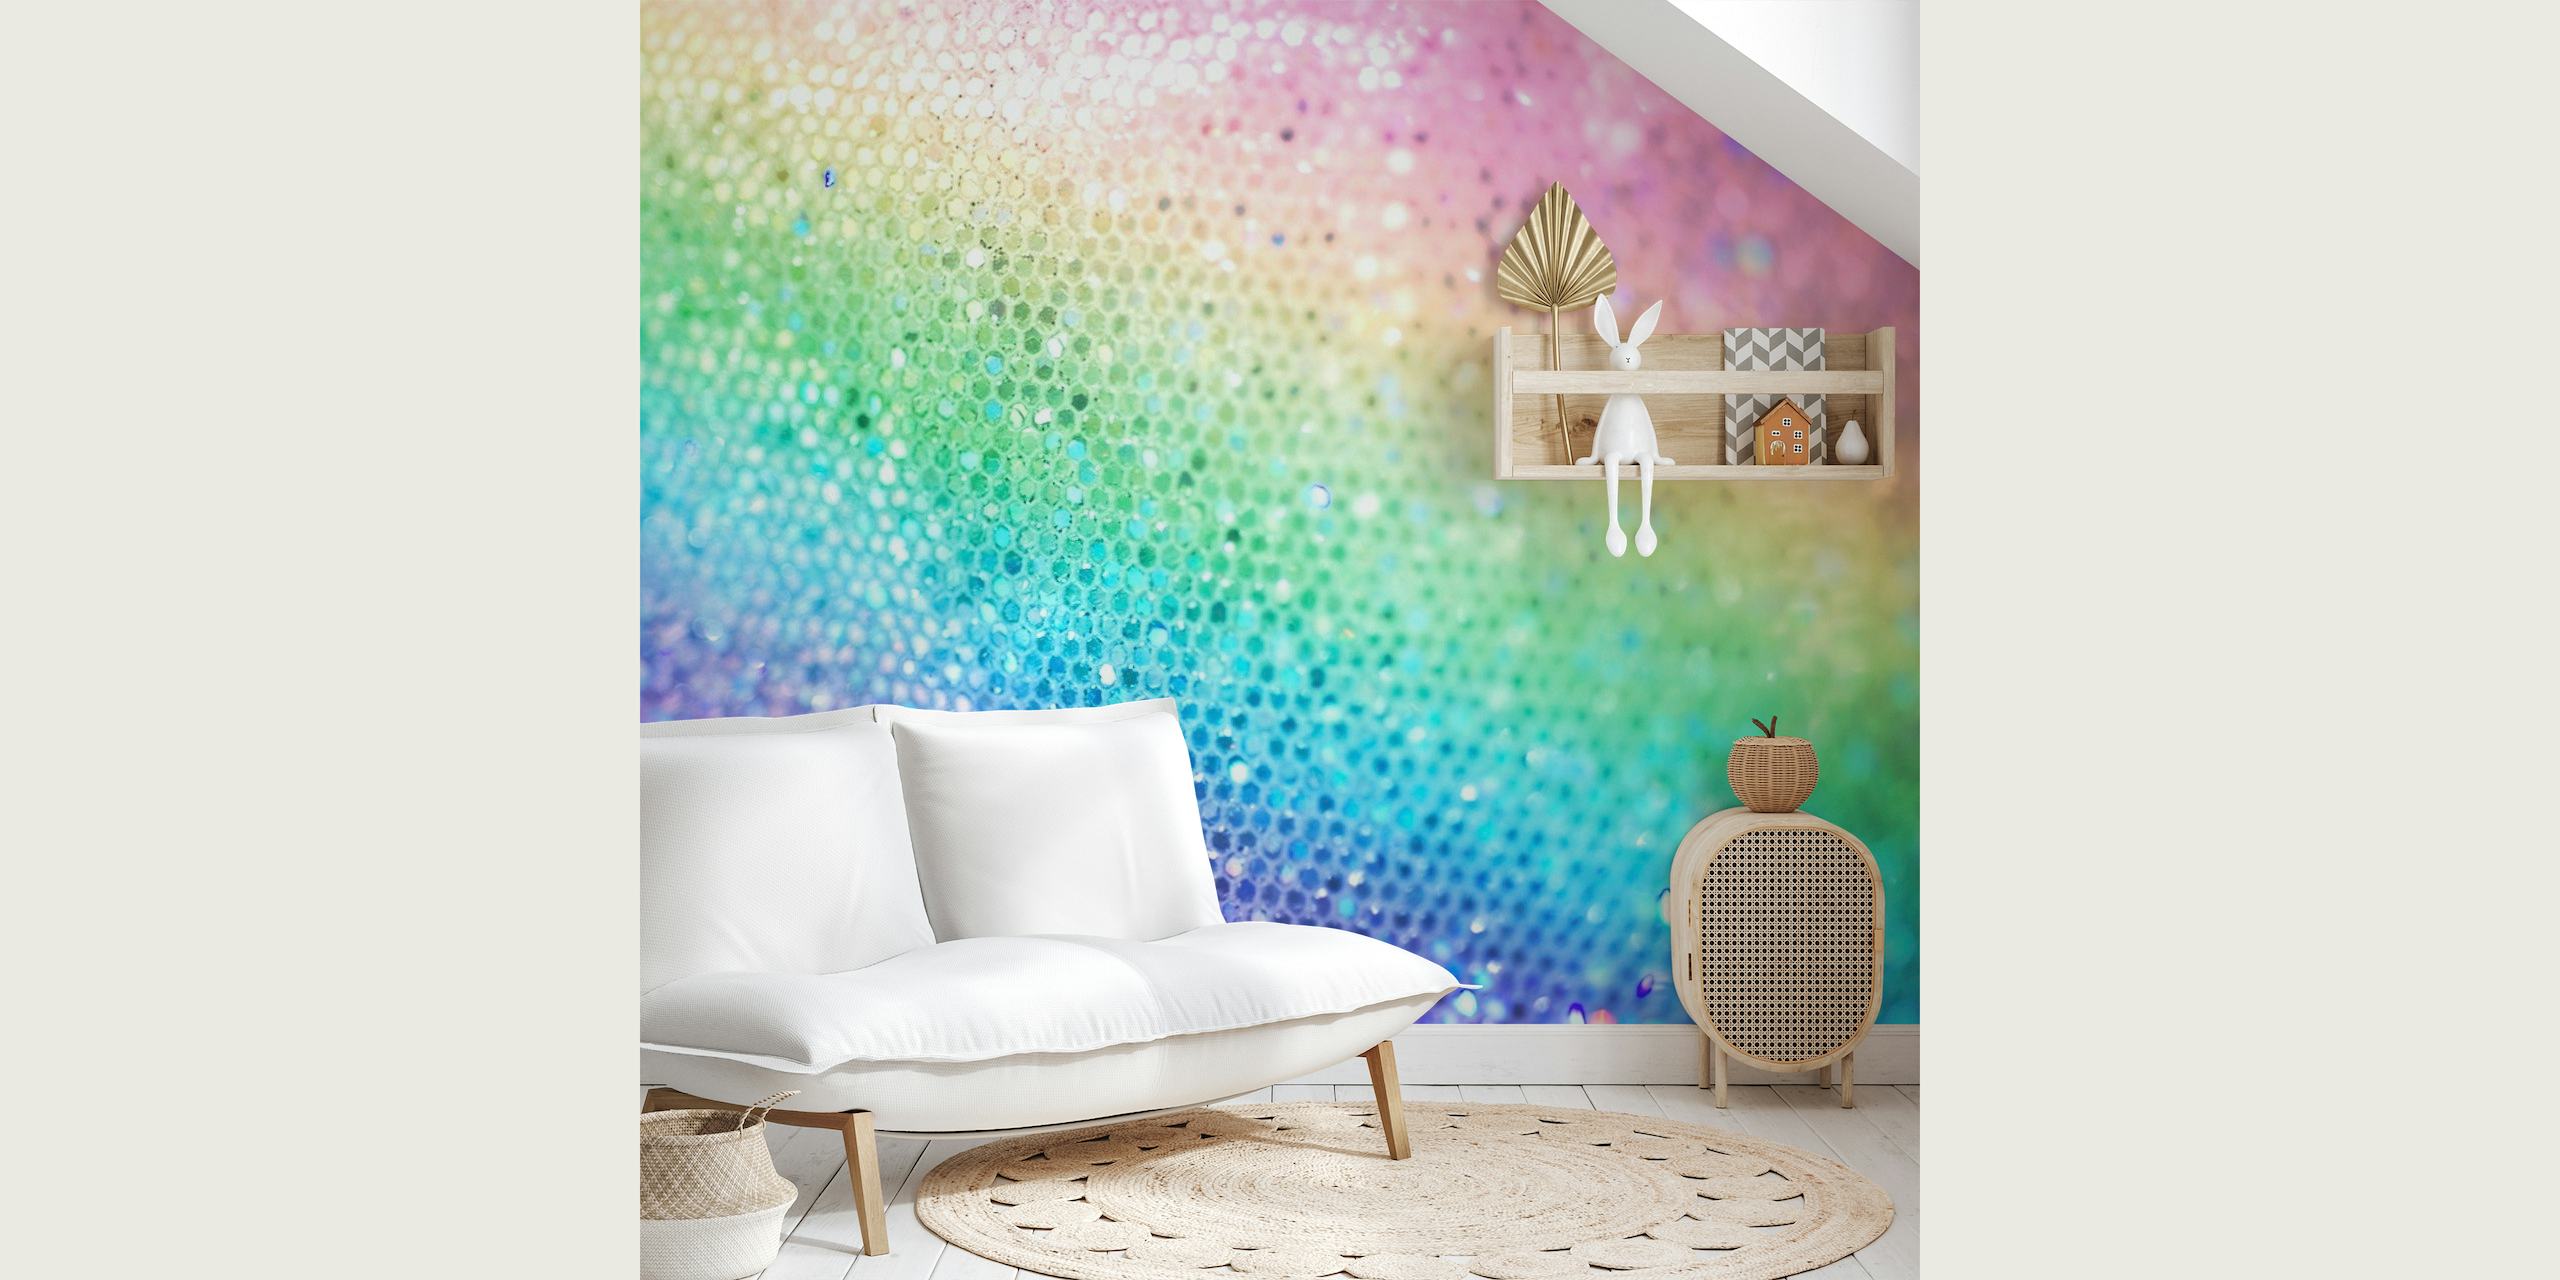 Barevná fototapeta Rainbow Princess Glitter s efektem jiskřivé textury